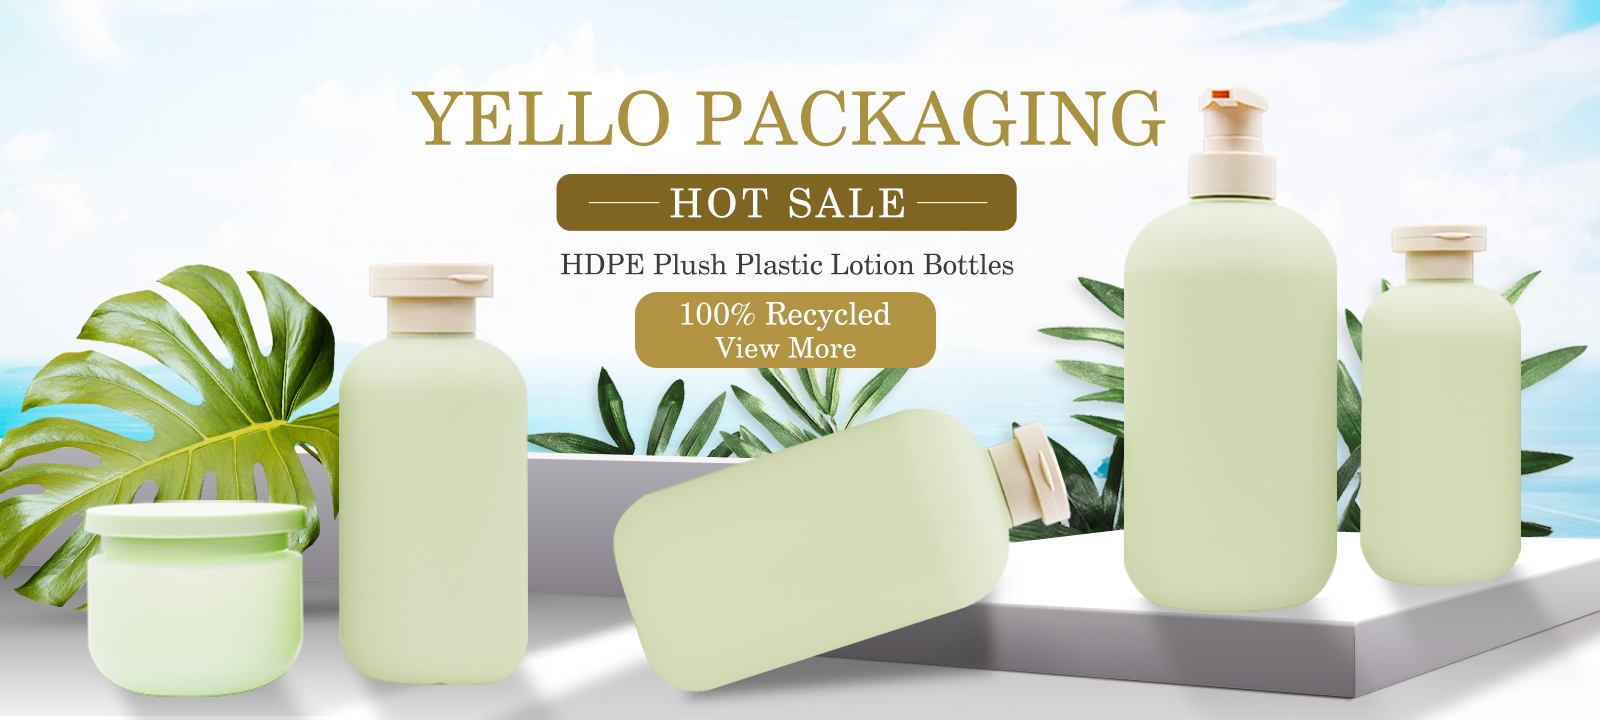 HDPE Plush Plastic Shampoo bottle